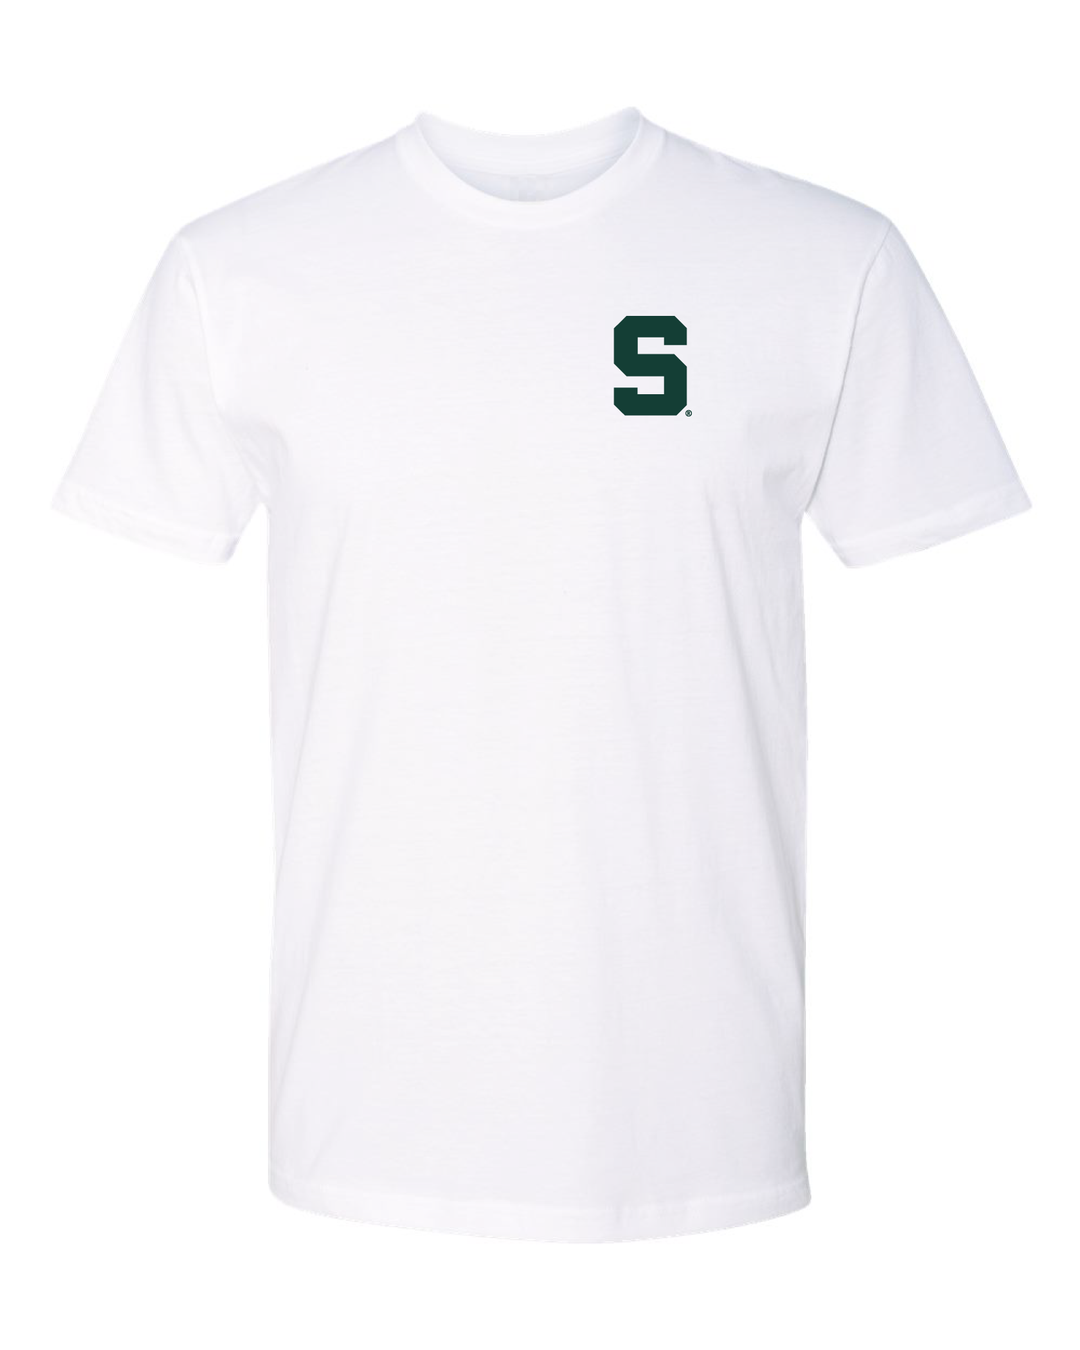 White Michigan State T Shirt with Green Block S Print